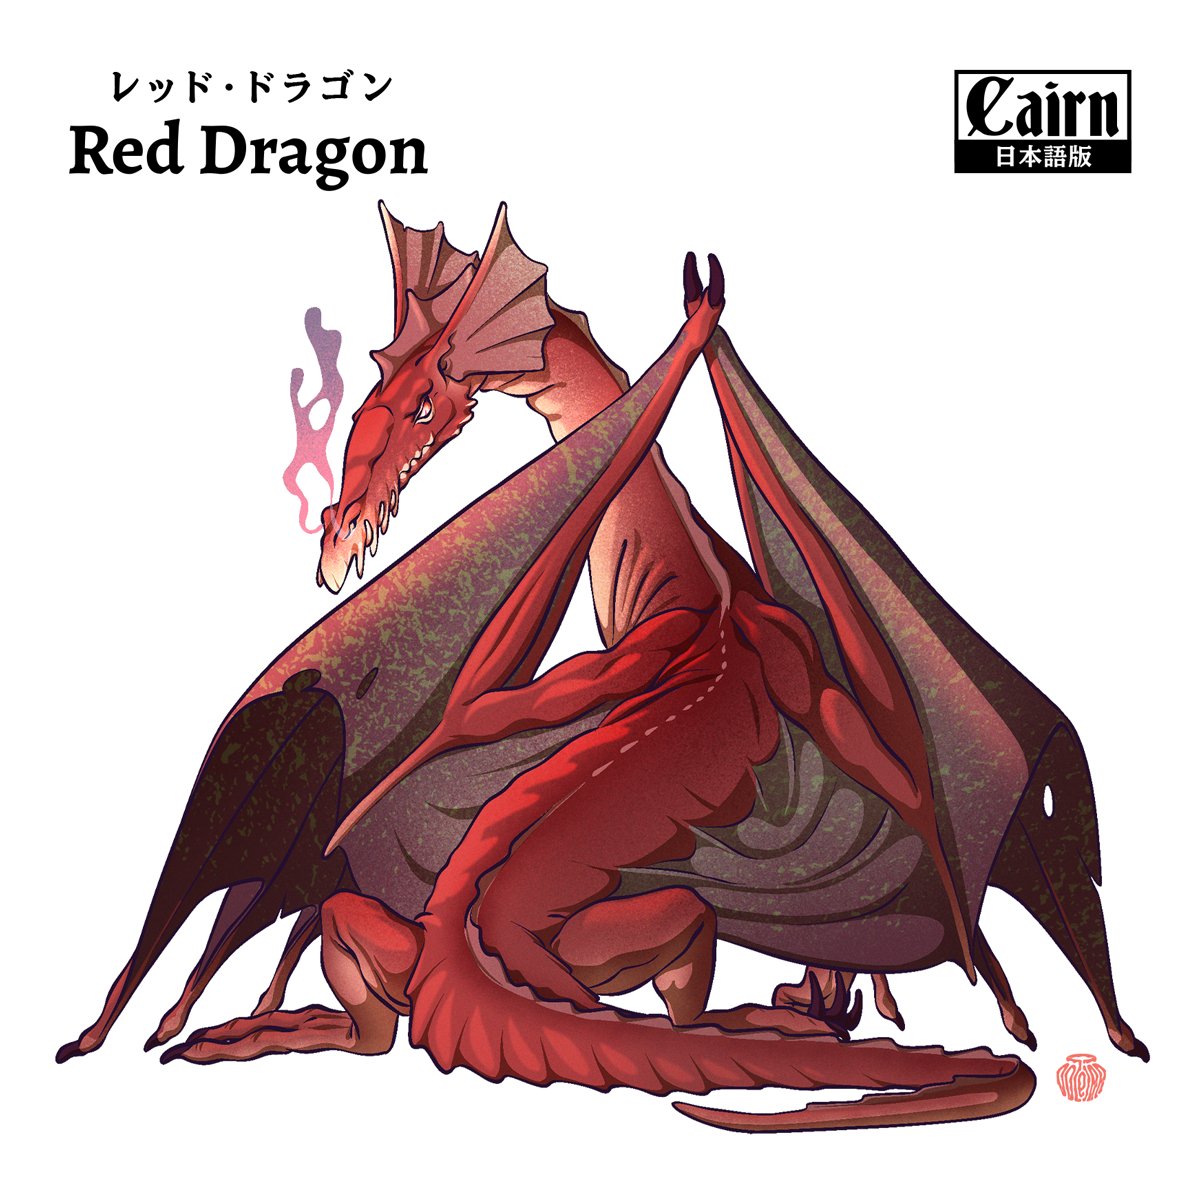 🔥🐉［99/146］
#reddragon #レッドドラゴン #dragon #ドラゴン #smaug #スマウグ #bestiary #cairnrpg #rpg #trpg #ttrpg #creaturedesign #monsterdesign #characterdesign #fantasy #ファンタジー #illustration #イラスト